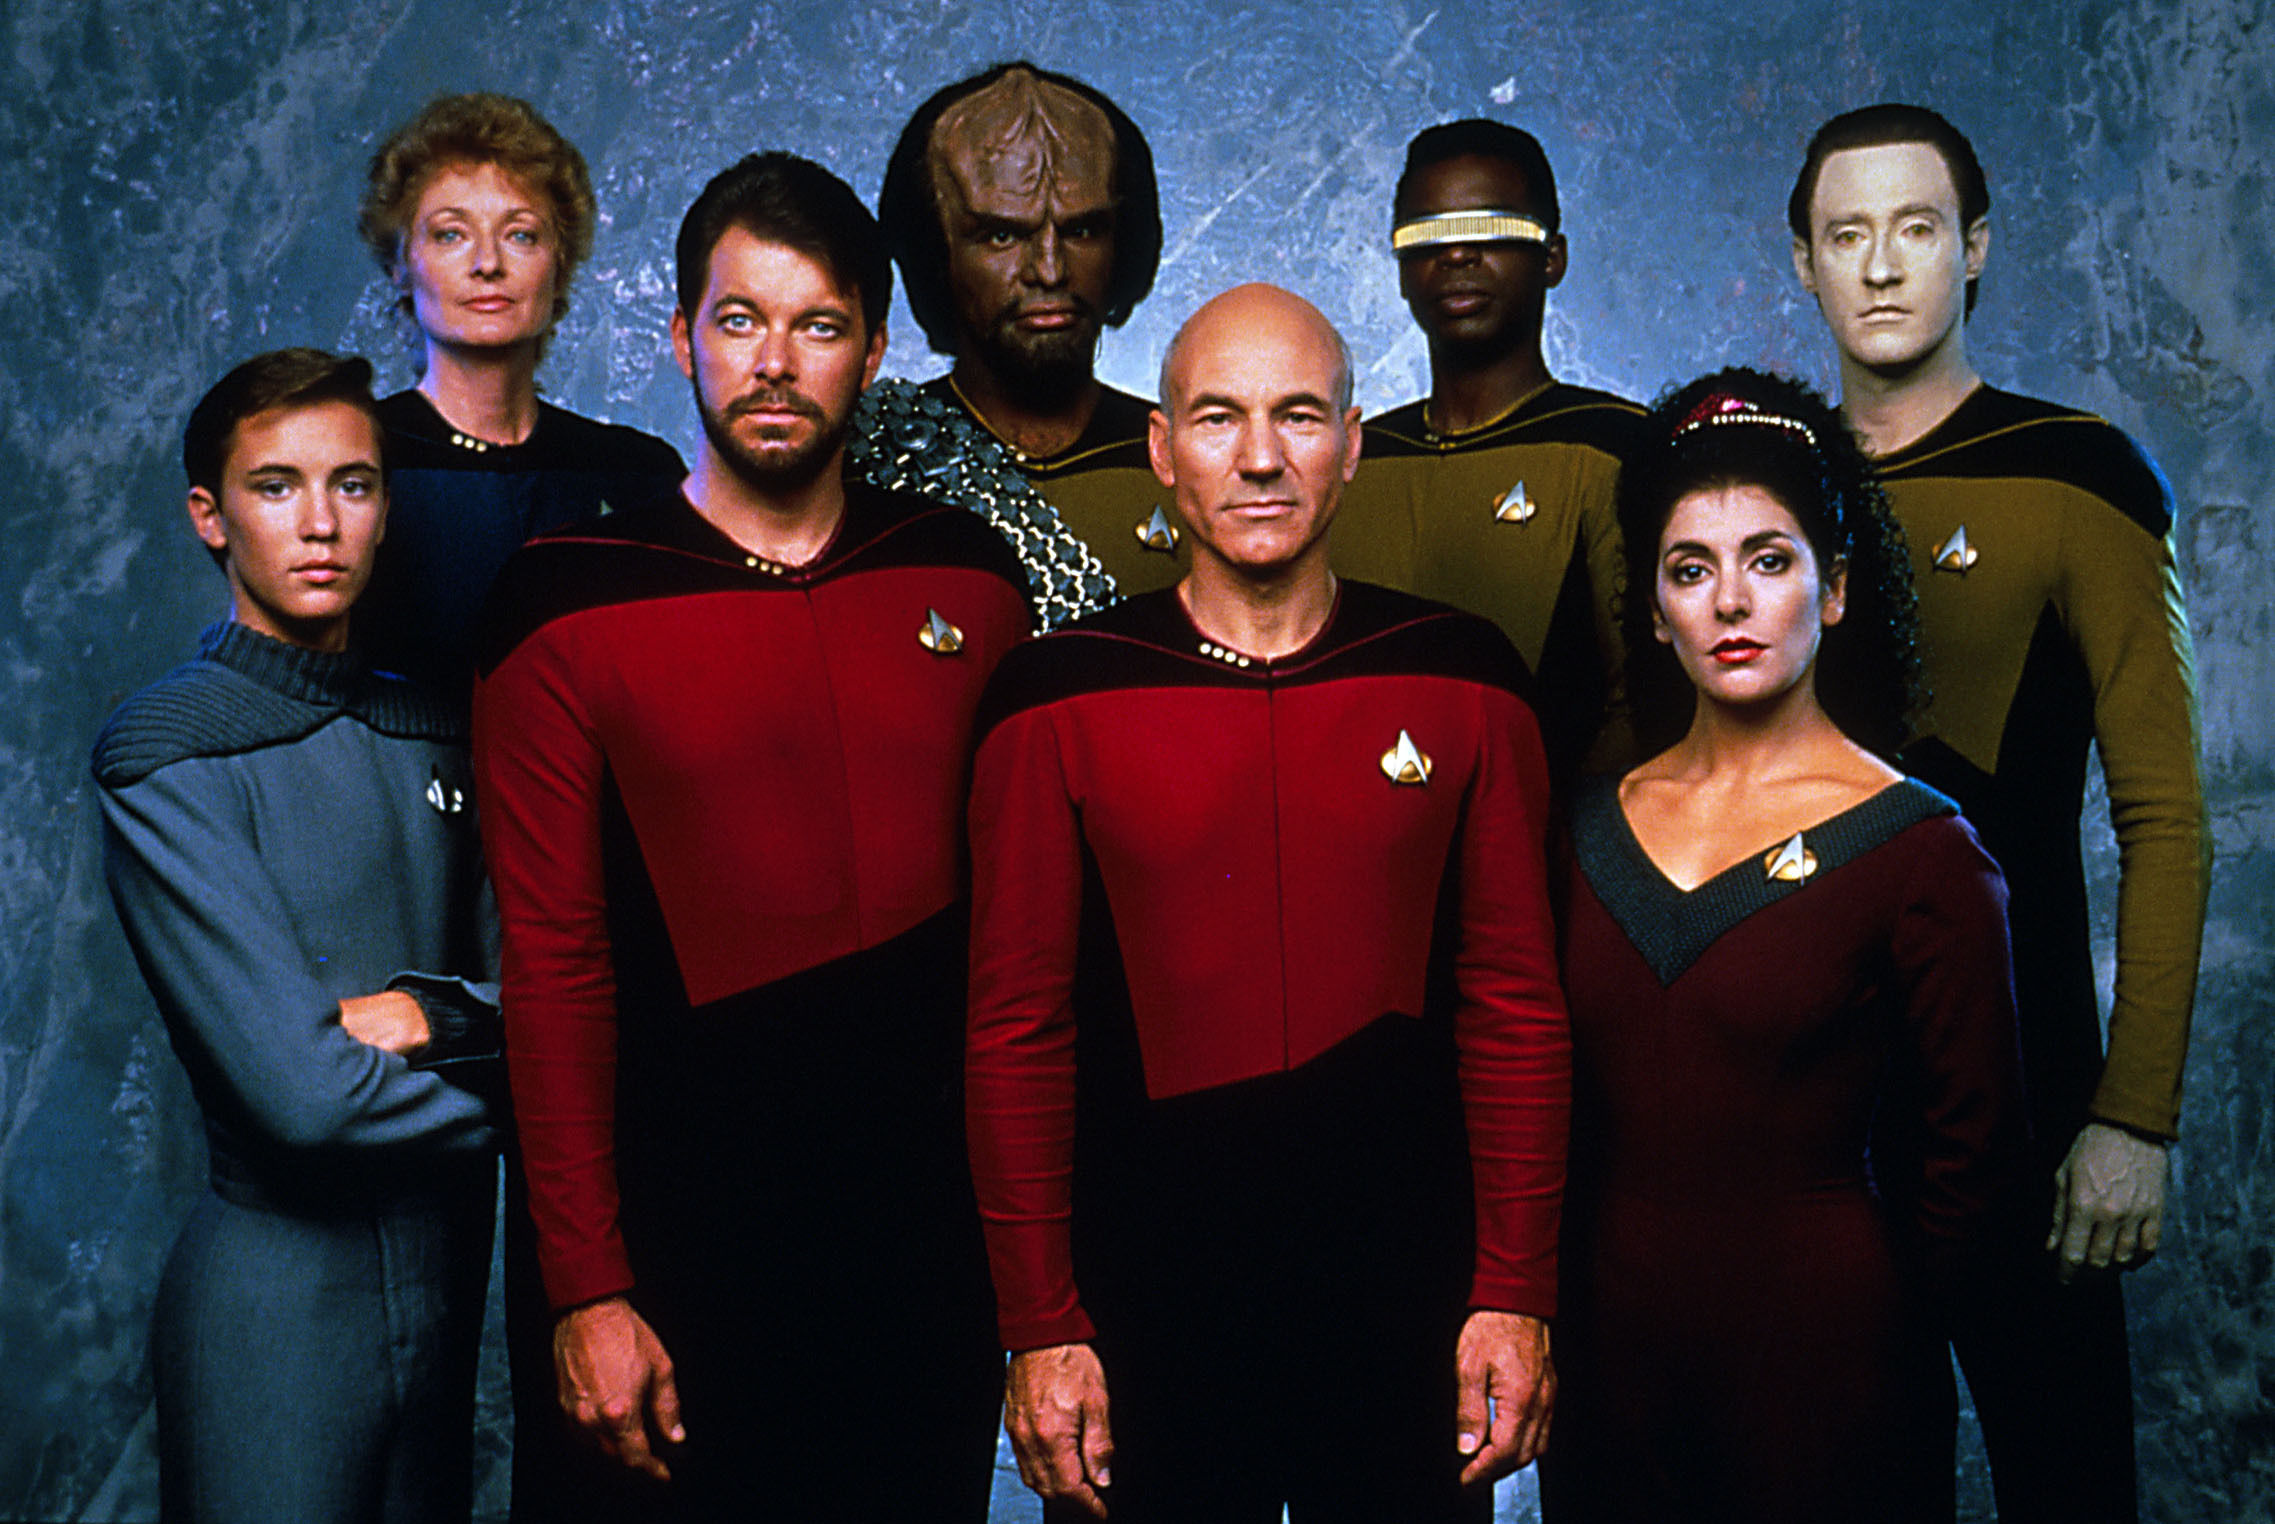 Star Trek: The Next Generation original costumes